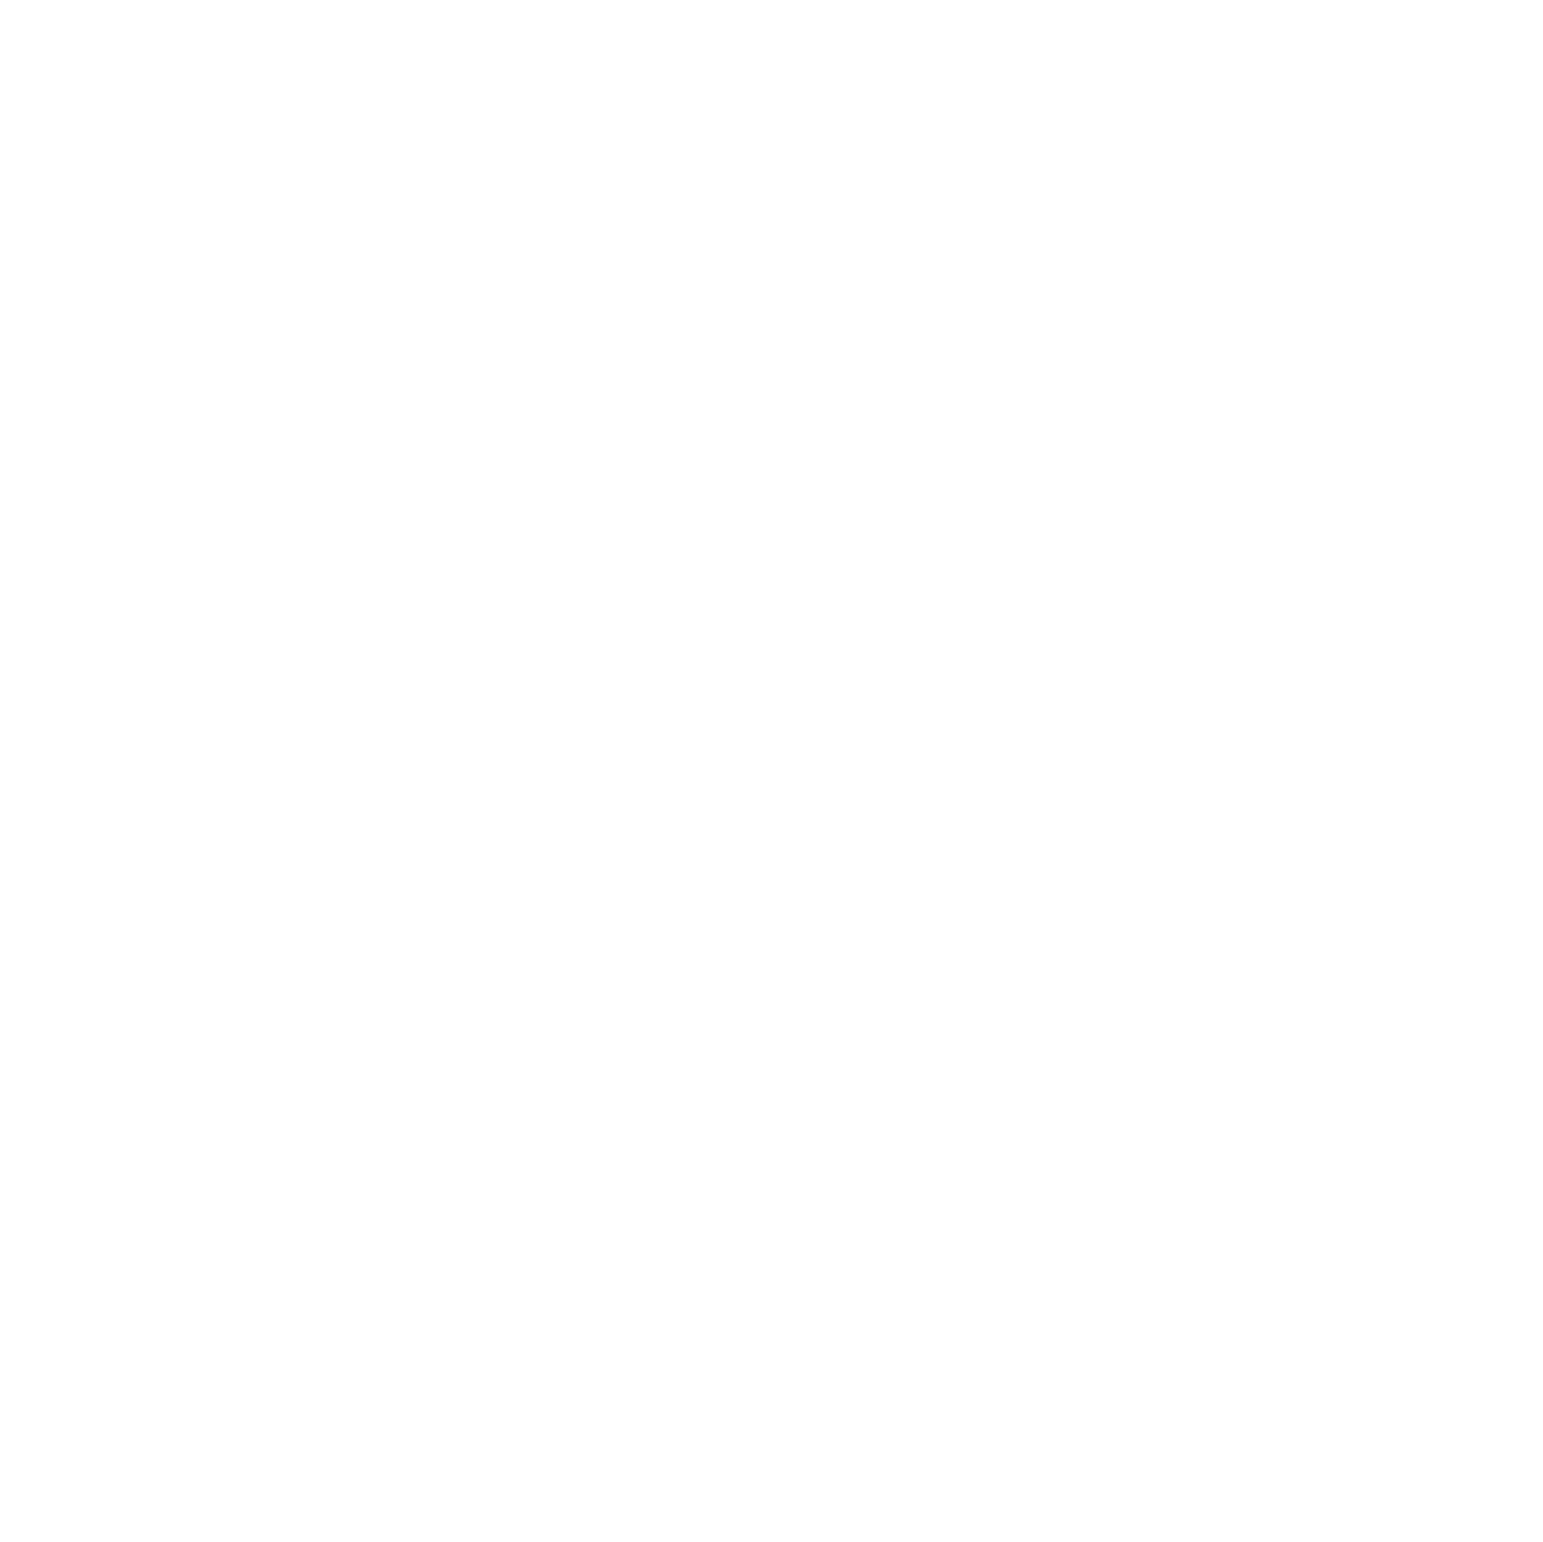 Forian logo pour fonds sombres (PNG transparent)